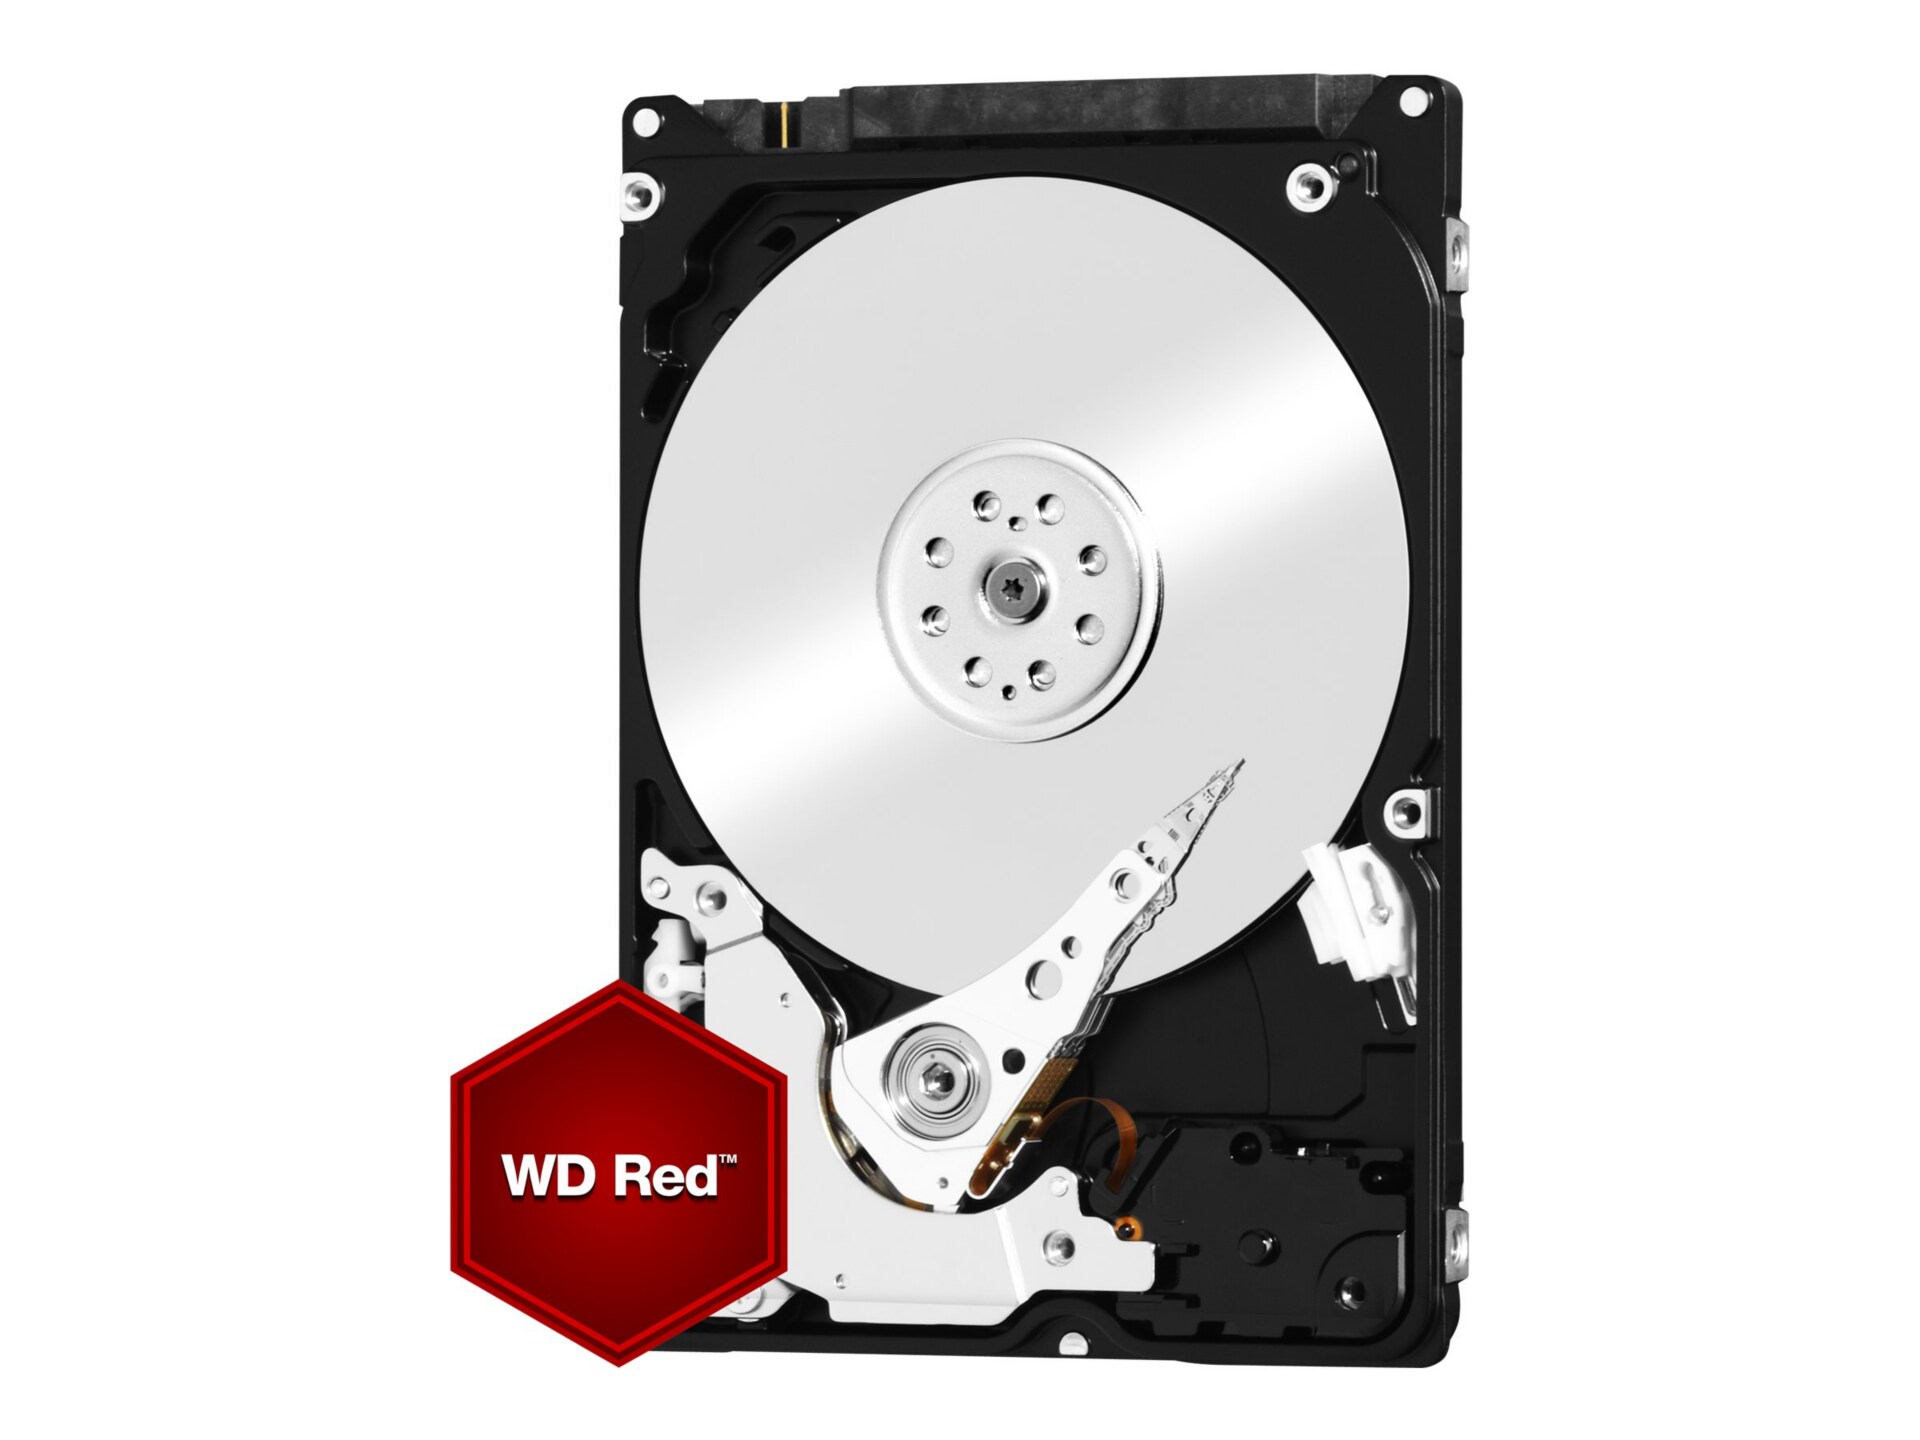 WD Red NAS Hard Drive WD7500BFCX - hard drive - 750 GB - SATA 6Gb/s